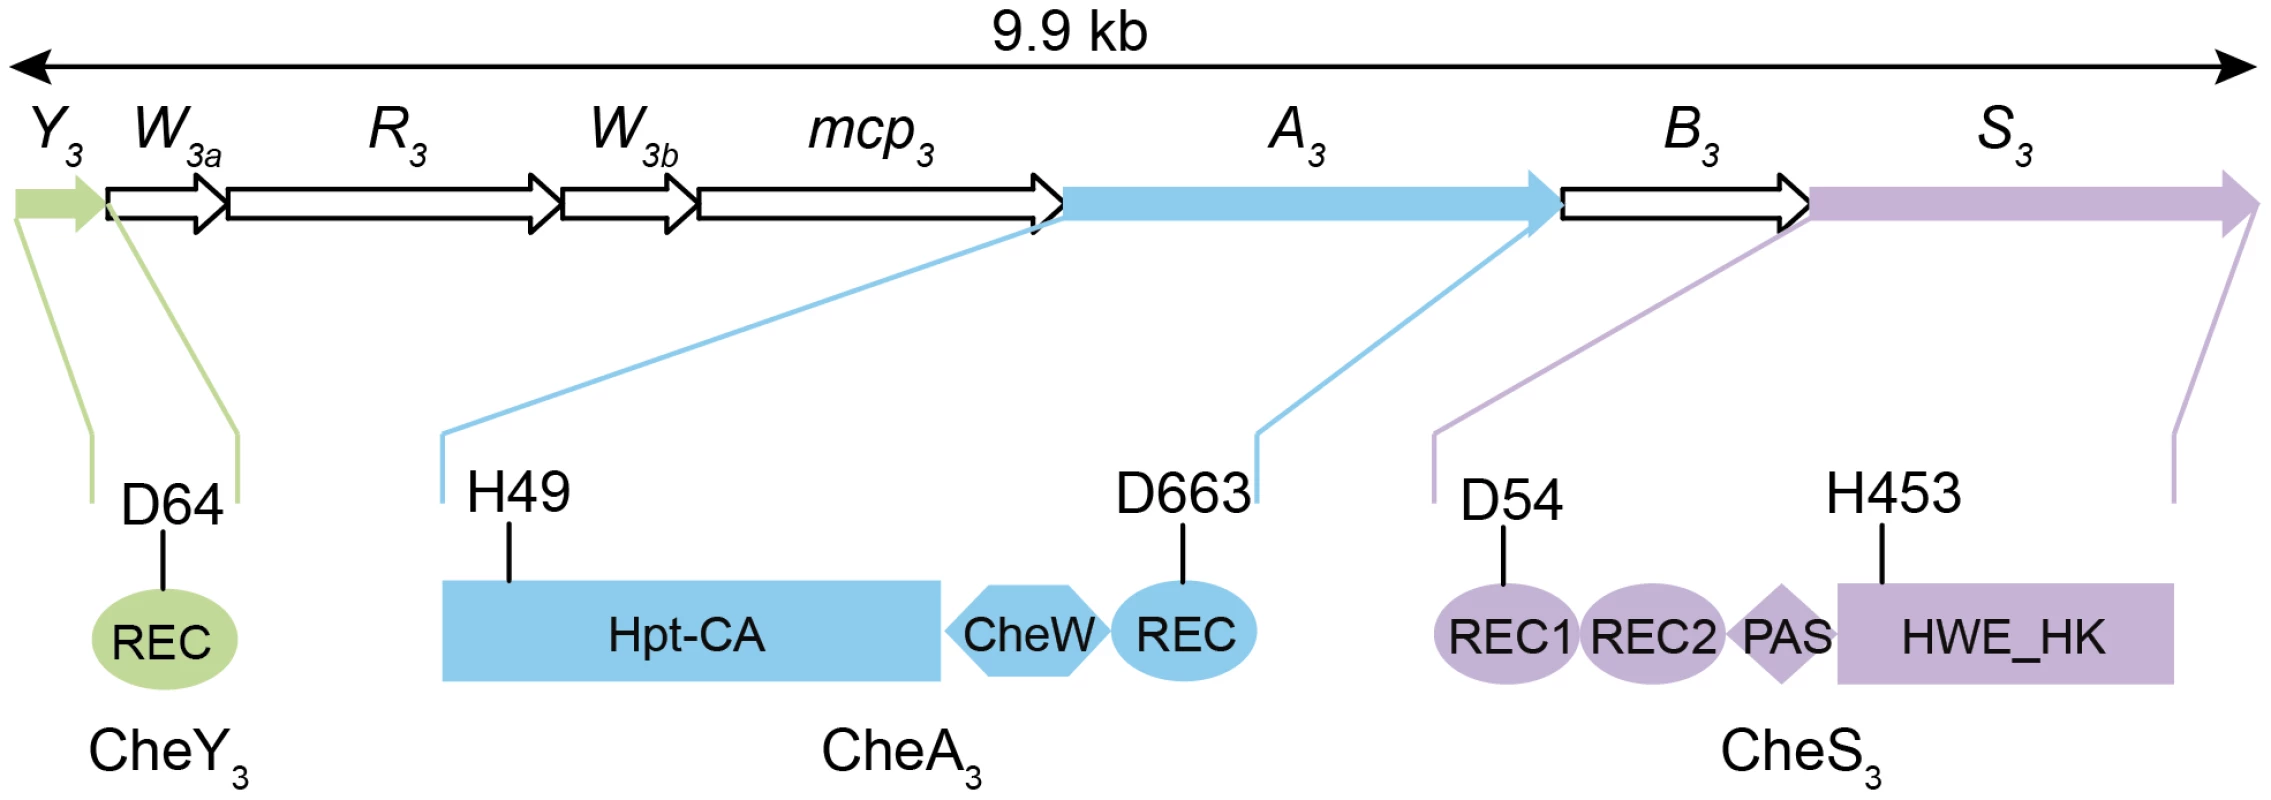 Gene arrangement of the <i>R. centenum che<sub>3</sub></i> cluster and domain organizations of CheA<sub>3</sub>, CheS<sub>3</sub>, and CheY<sub>3</sub>.